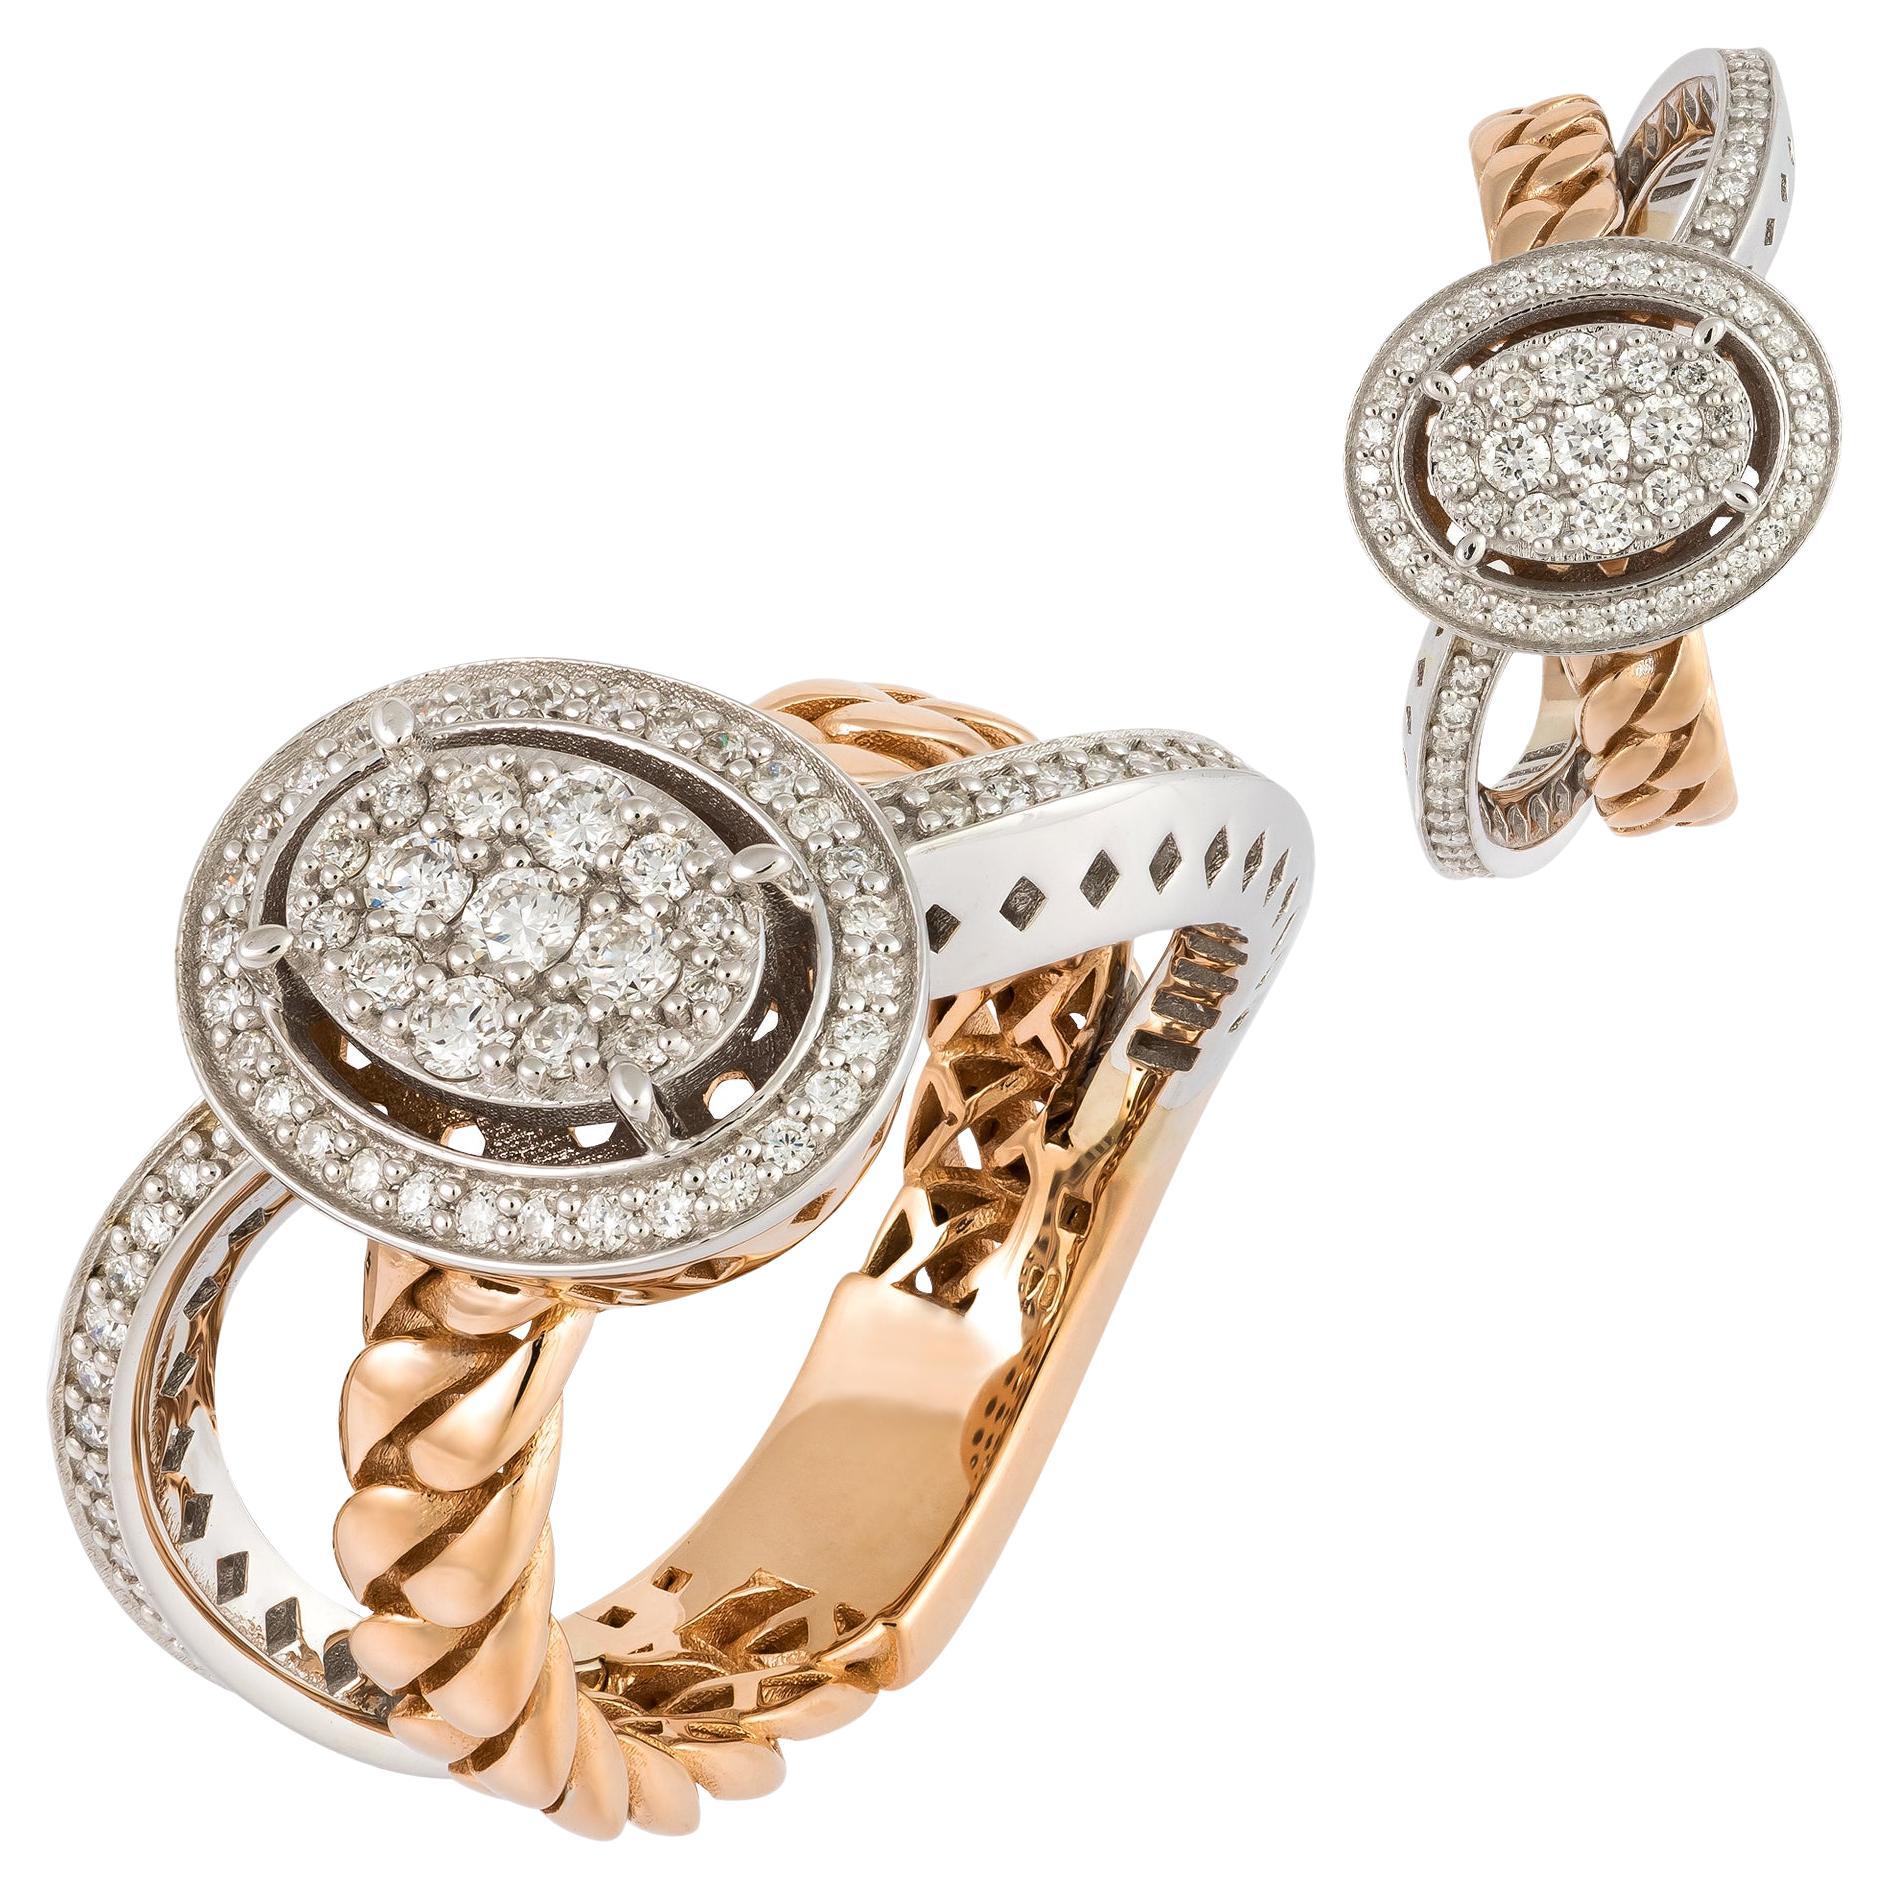 For Sale:  Stunning White Pink 18K Gold White Diamond Ring for Her